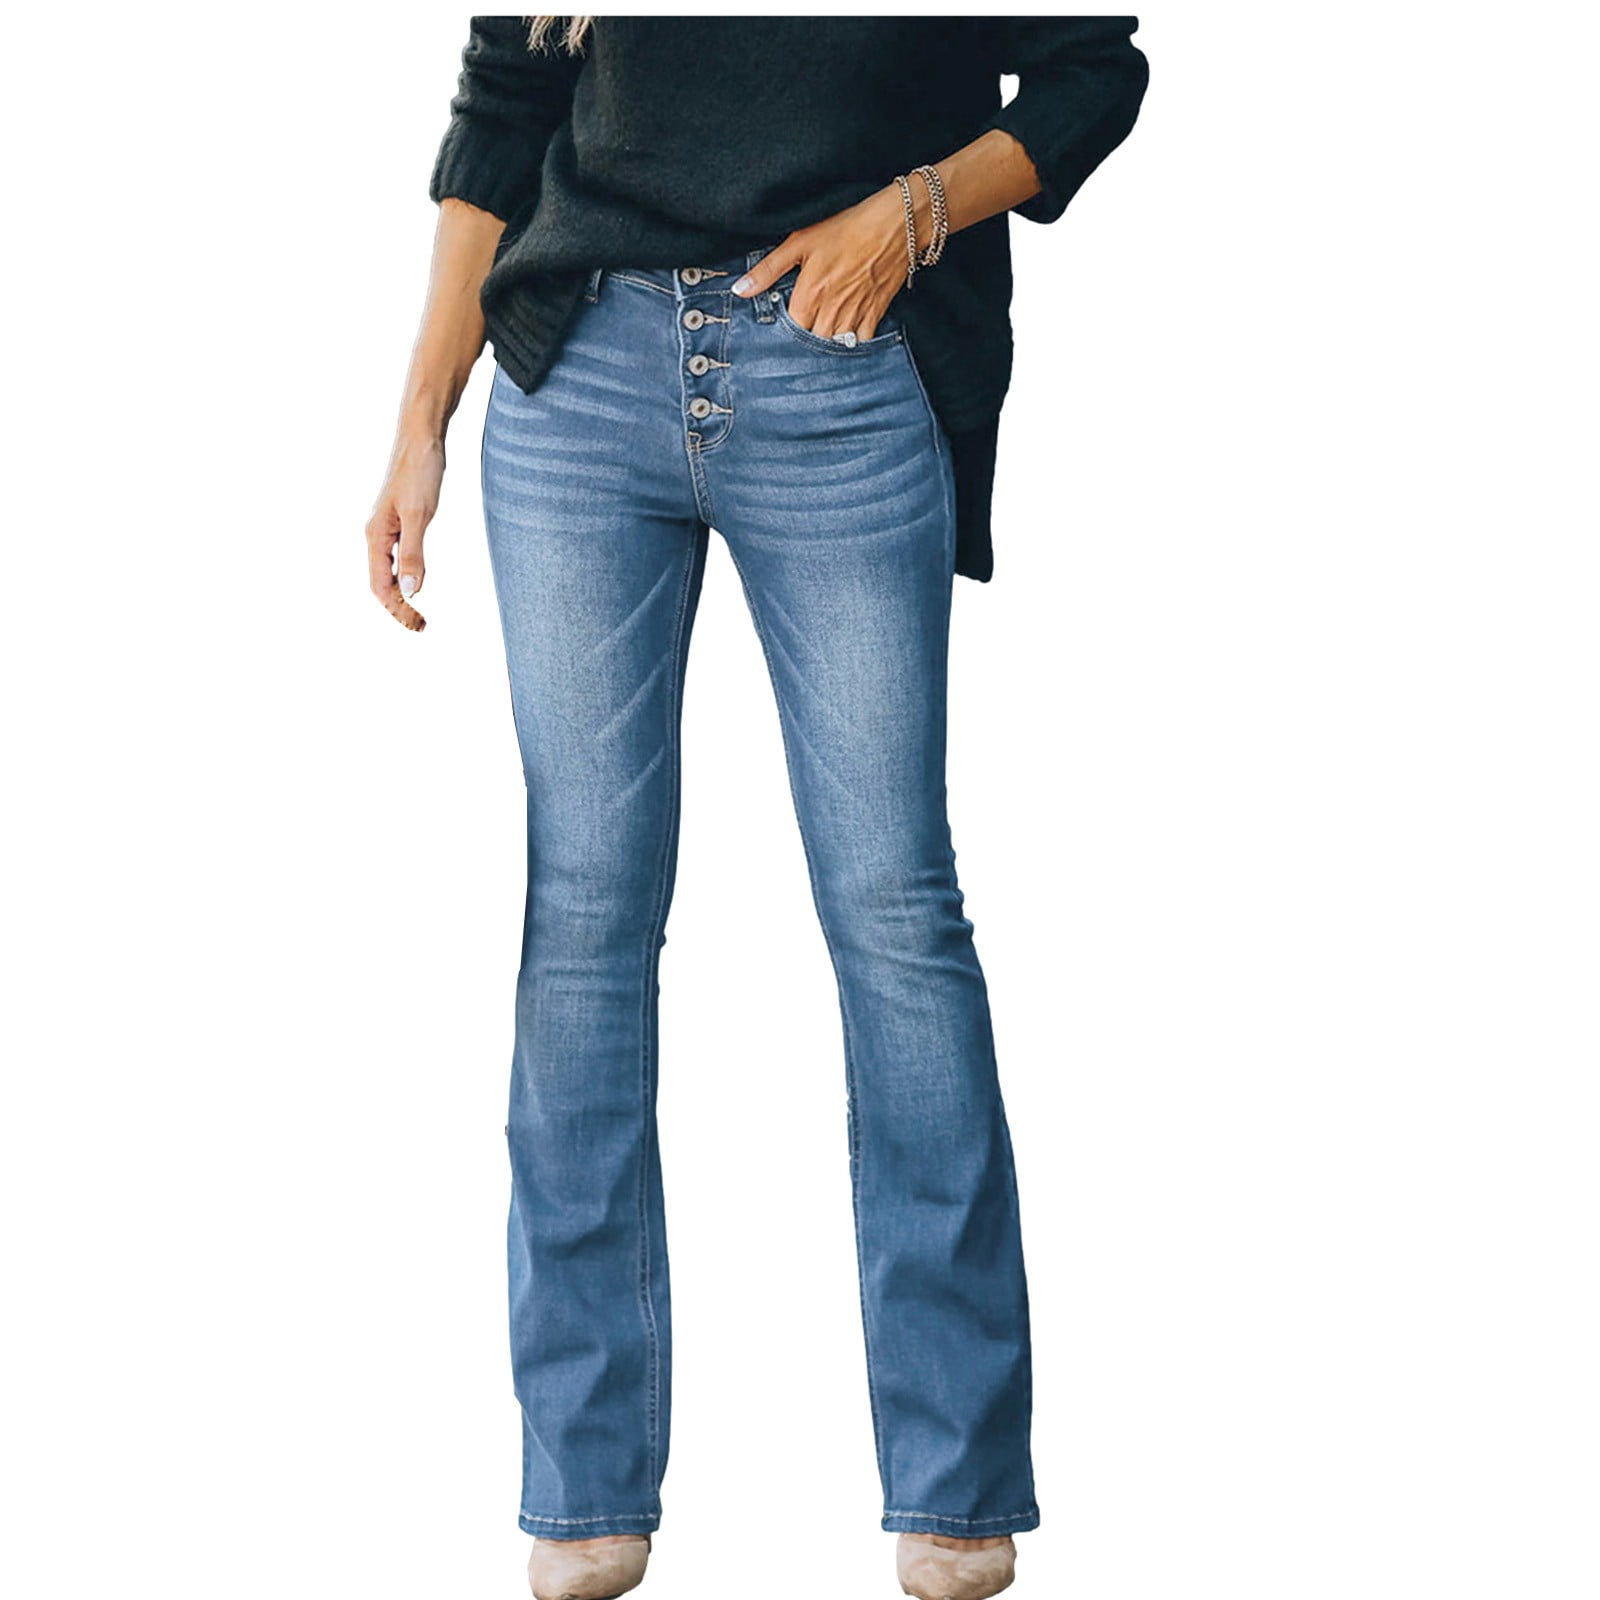 Womens Khaki Jeans